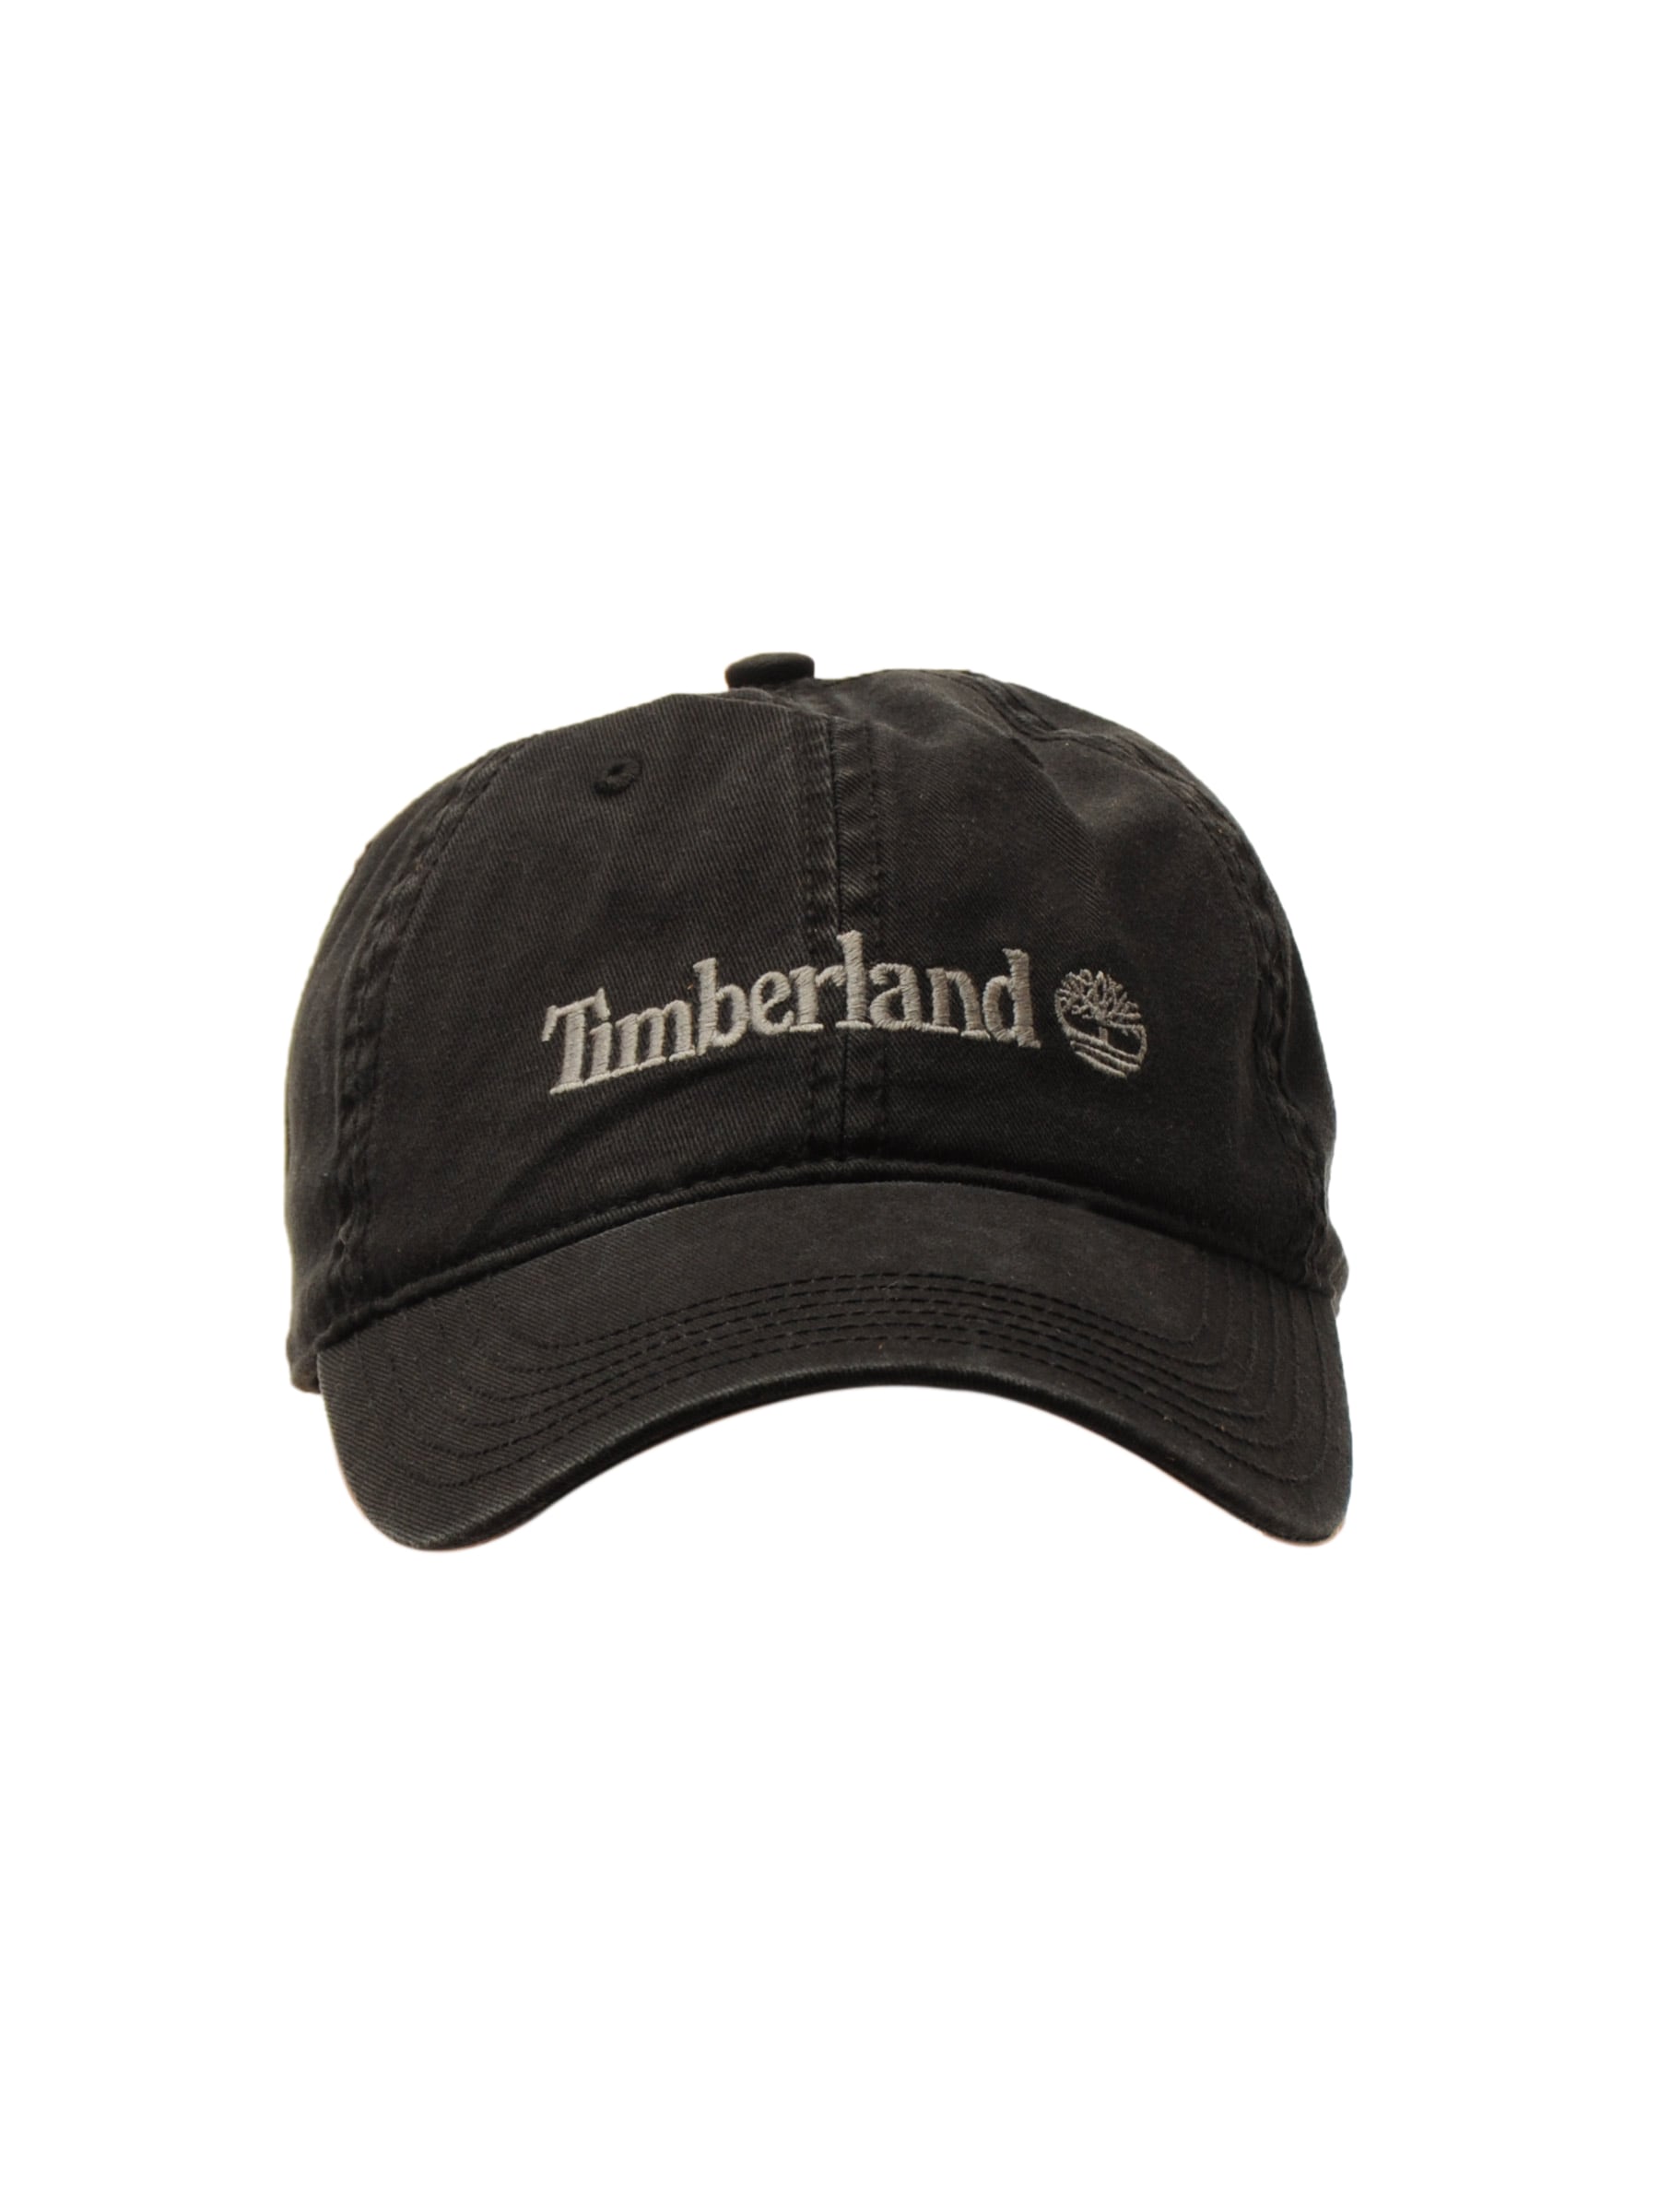 Timberland Unisex Casual Black Caps